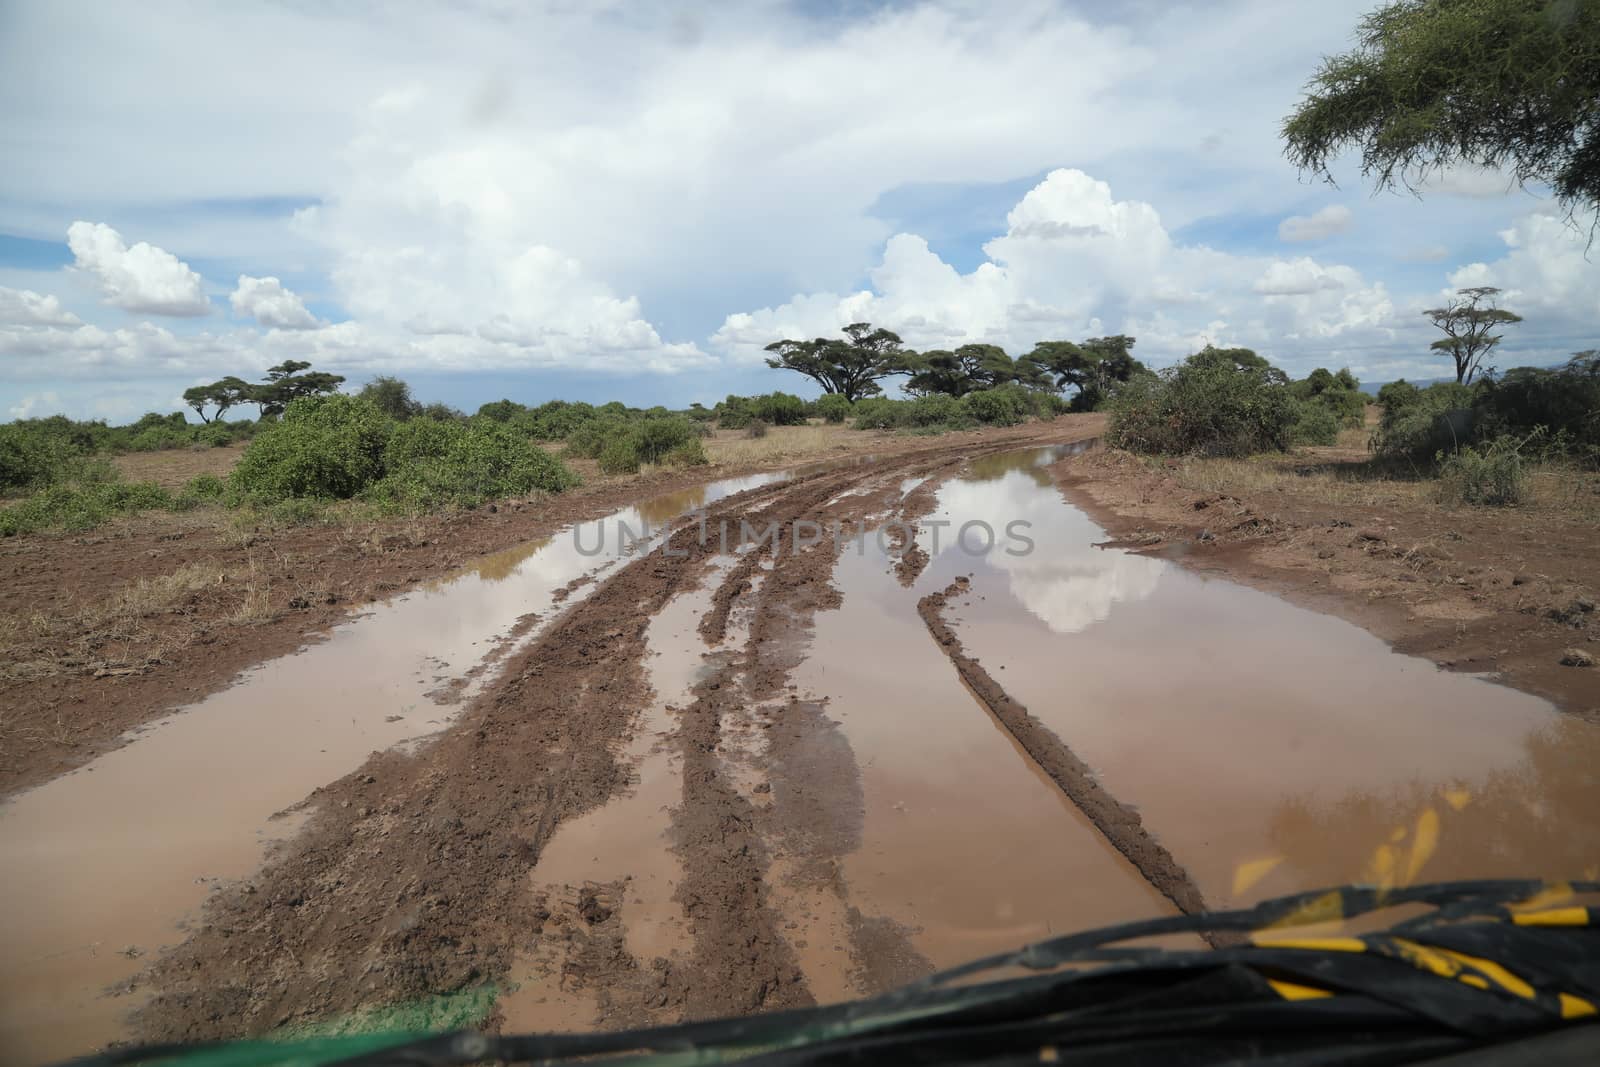 Damaged Rural Road Texture Masai Mara Kenya Africa